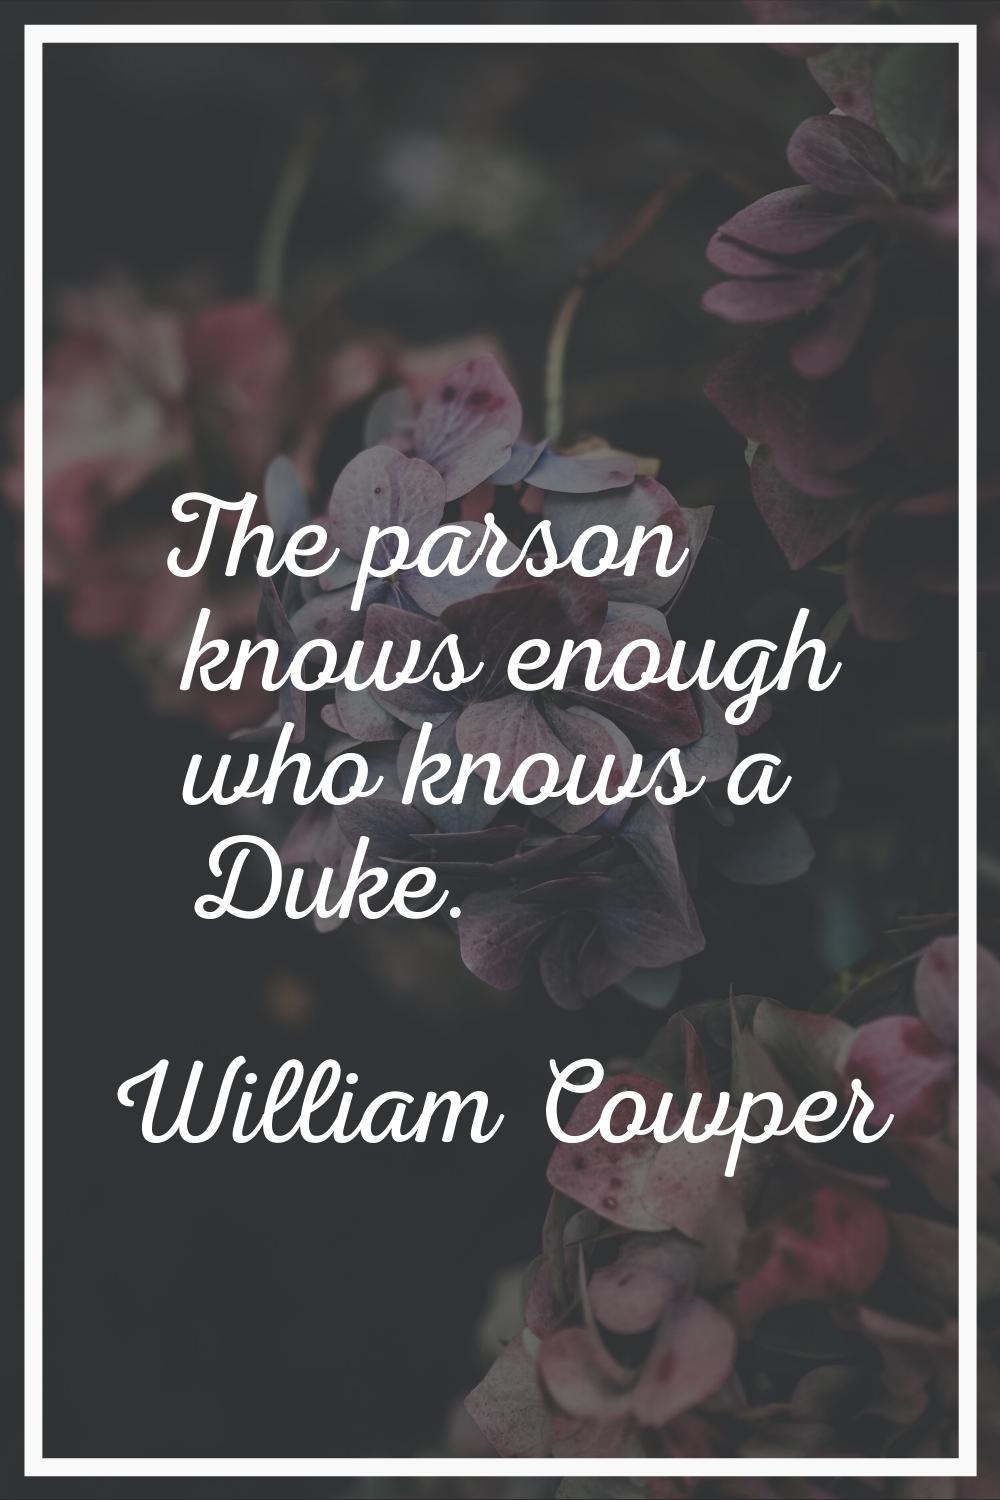 The parson knows enough who knows a Duke.